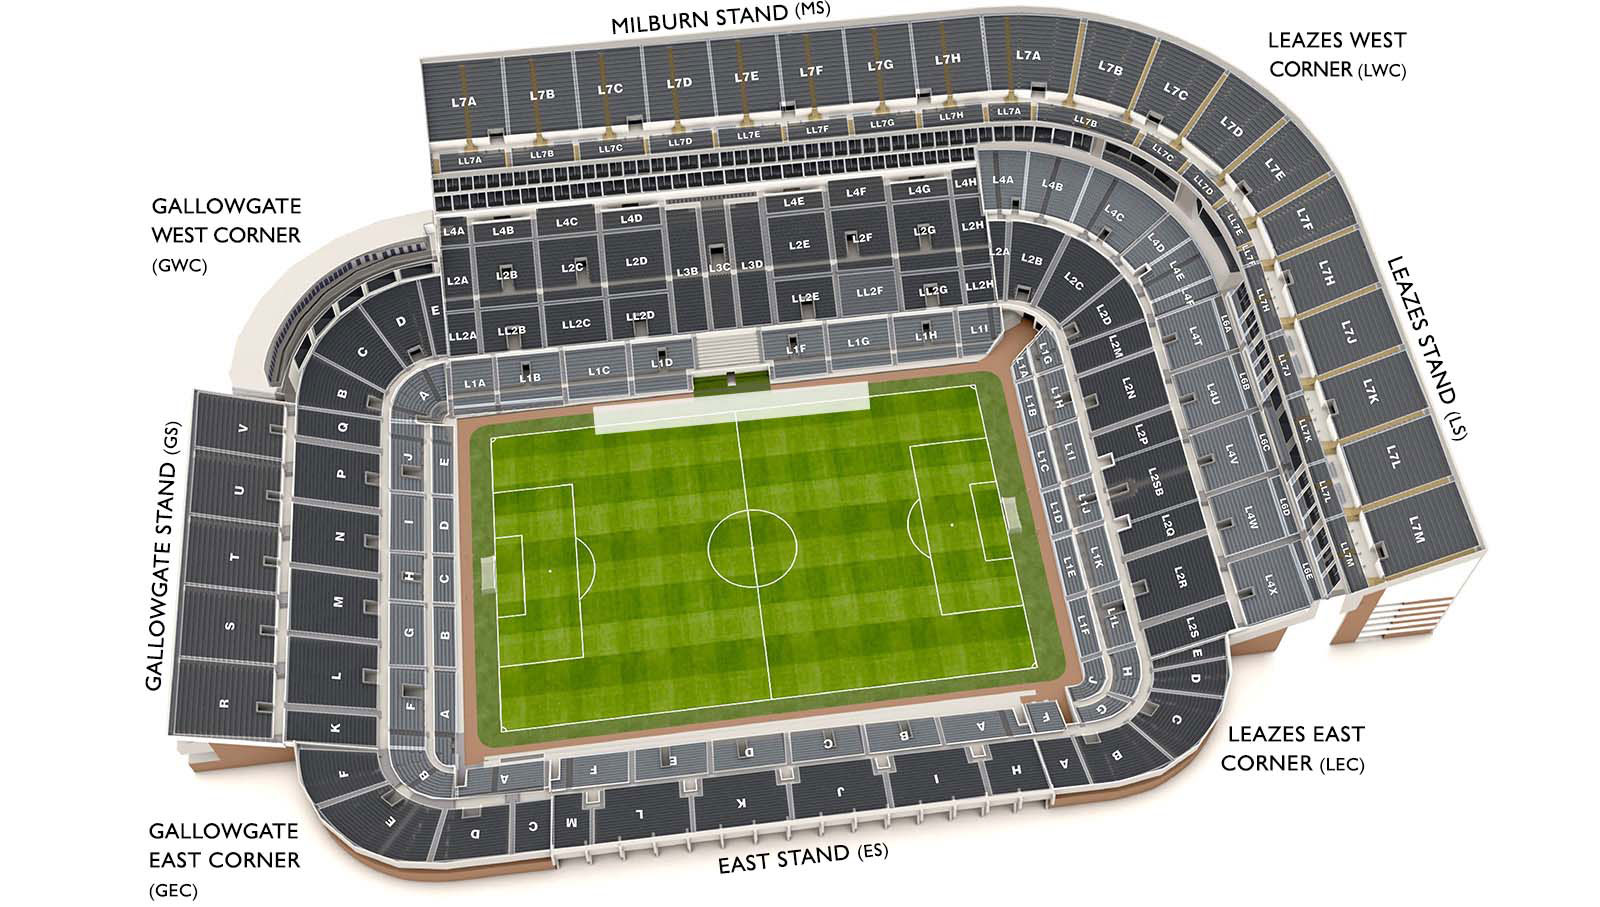 St James' Park seating plan